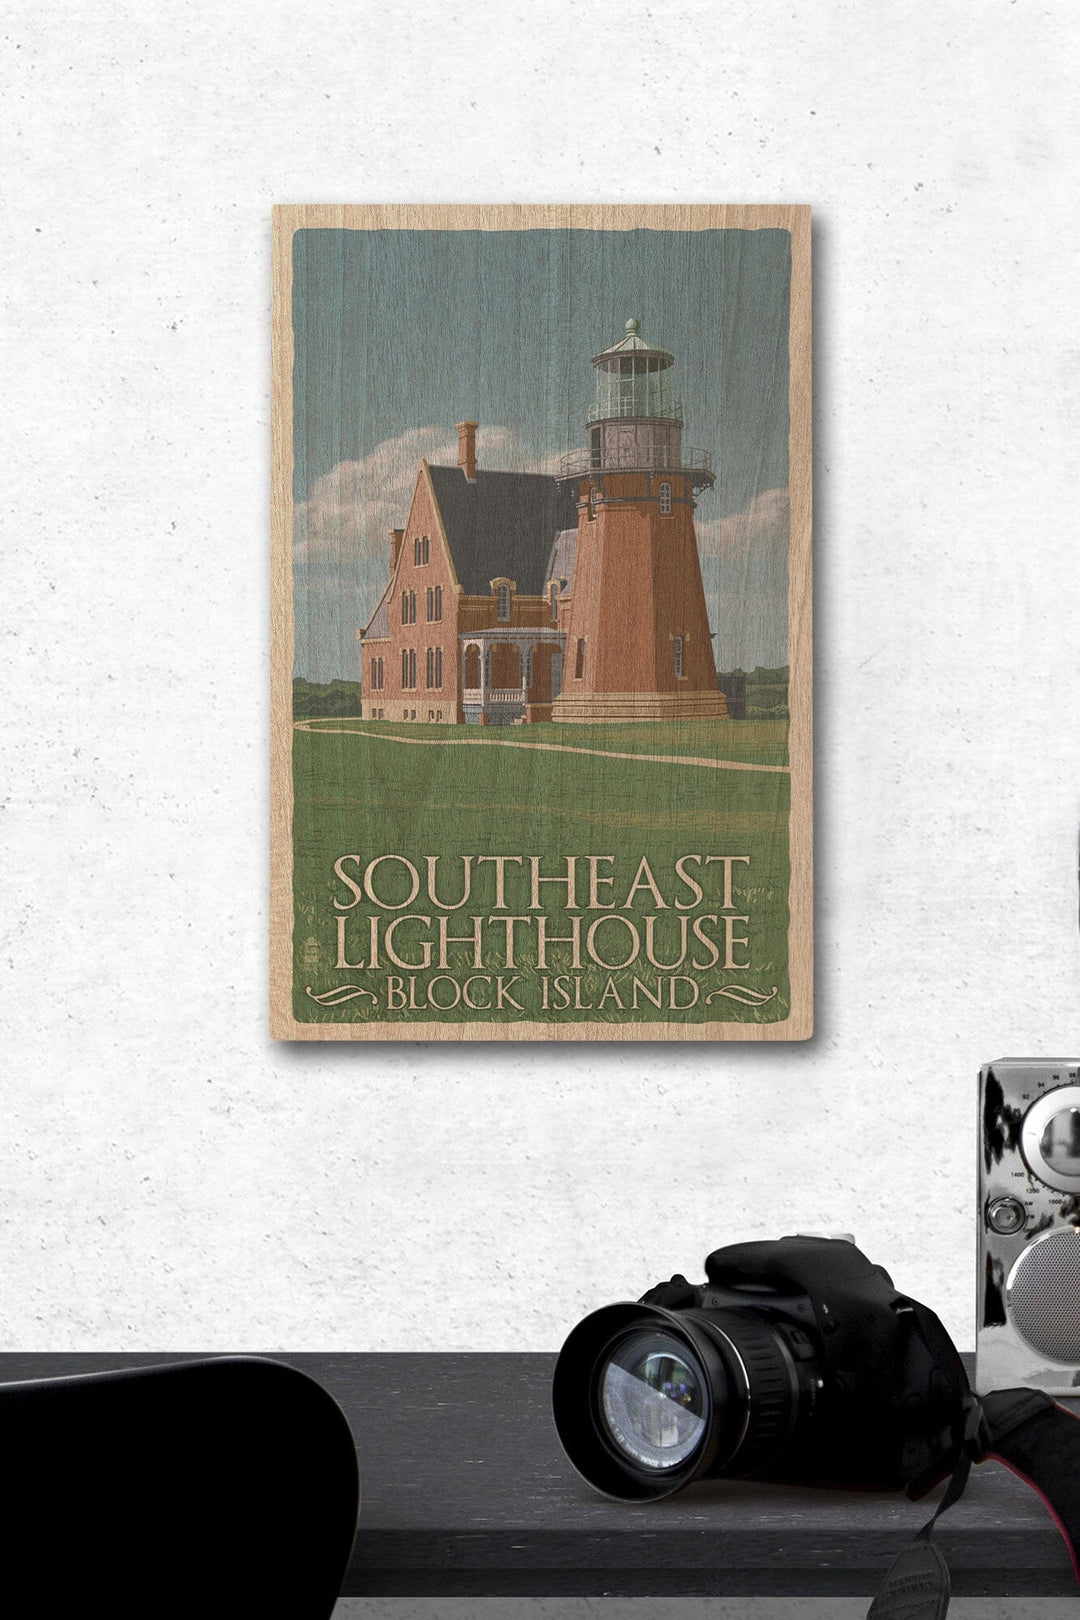 Block Island, Rhode Island, South East Lighthouse, Letterpress, Lantern Press Artwork, Wood Signs and Postcards Wood Lantern Press 12 x 18 Wood Gallery Print 